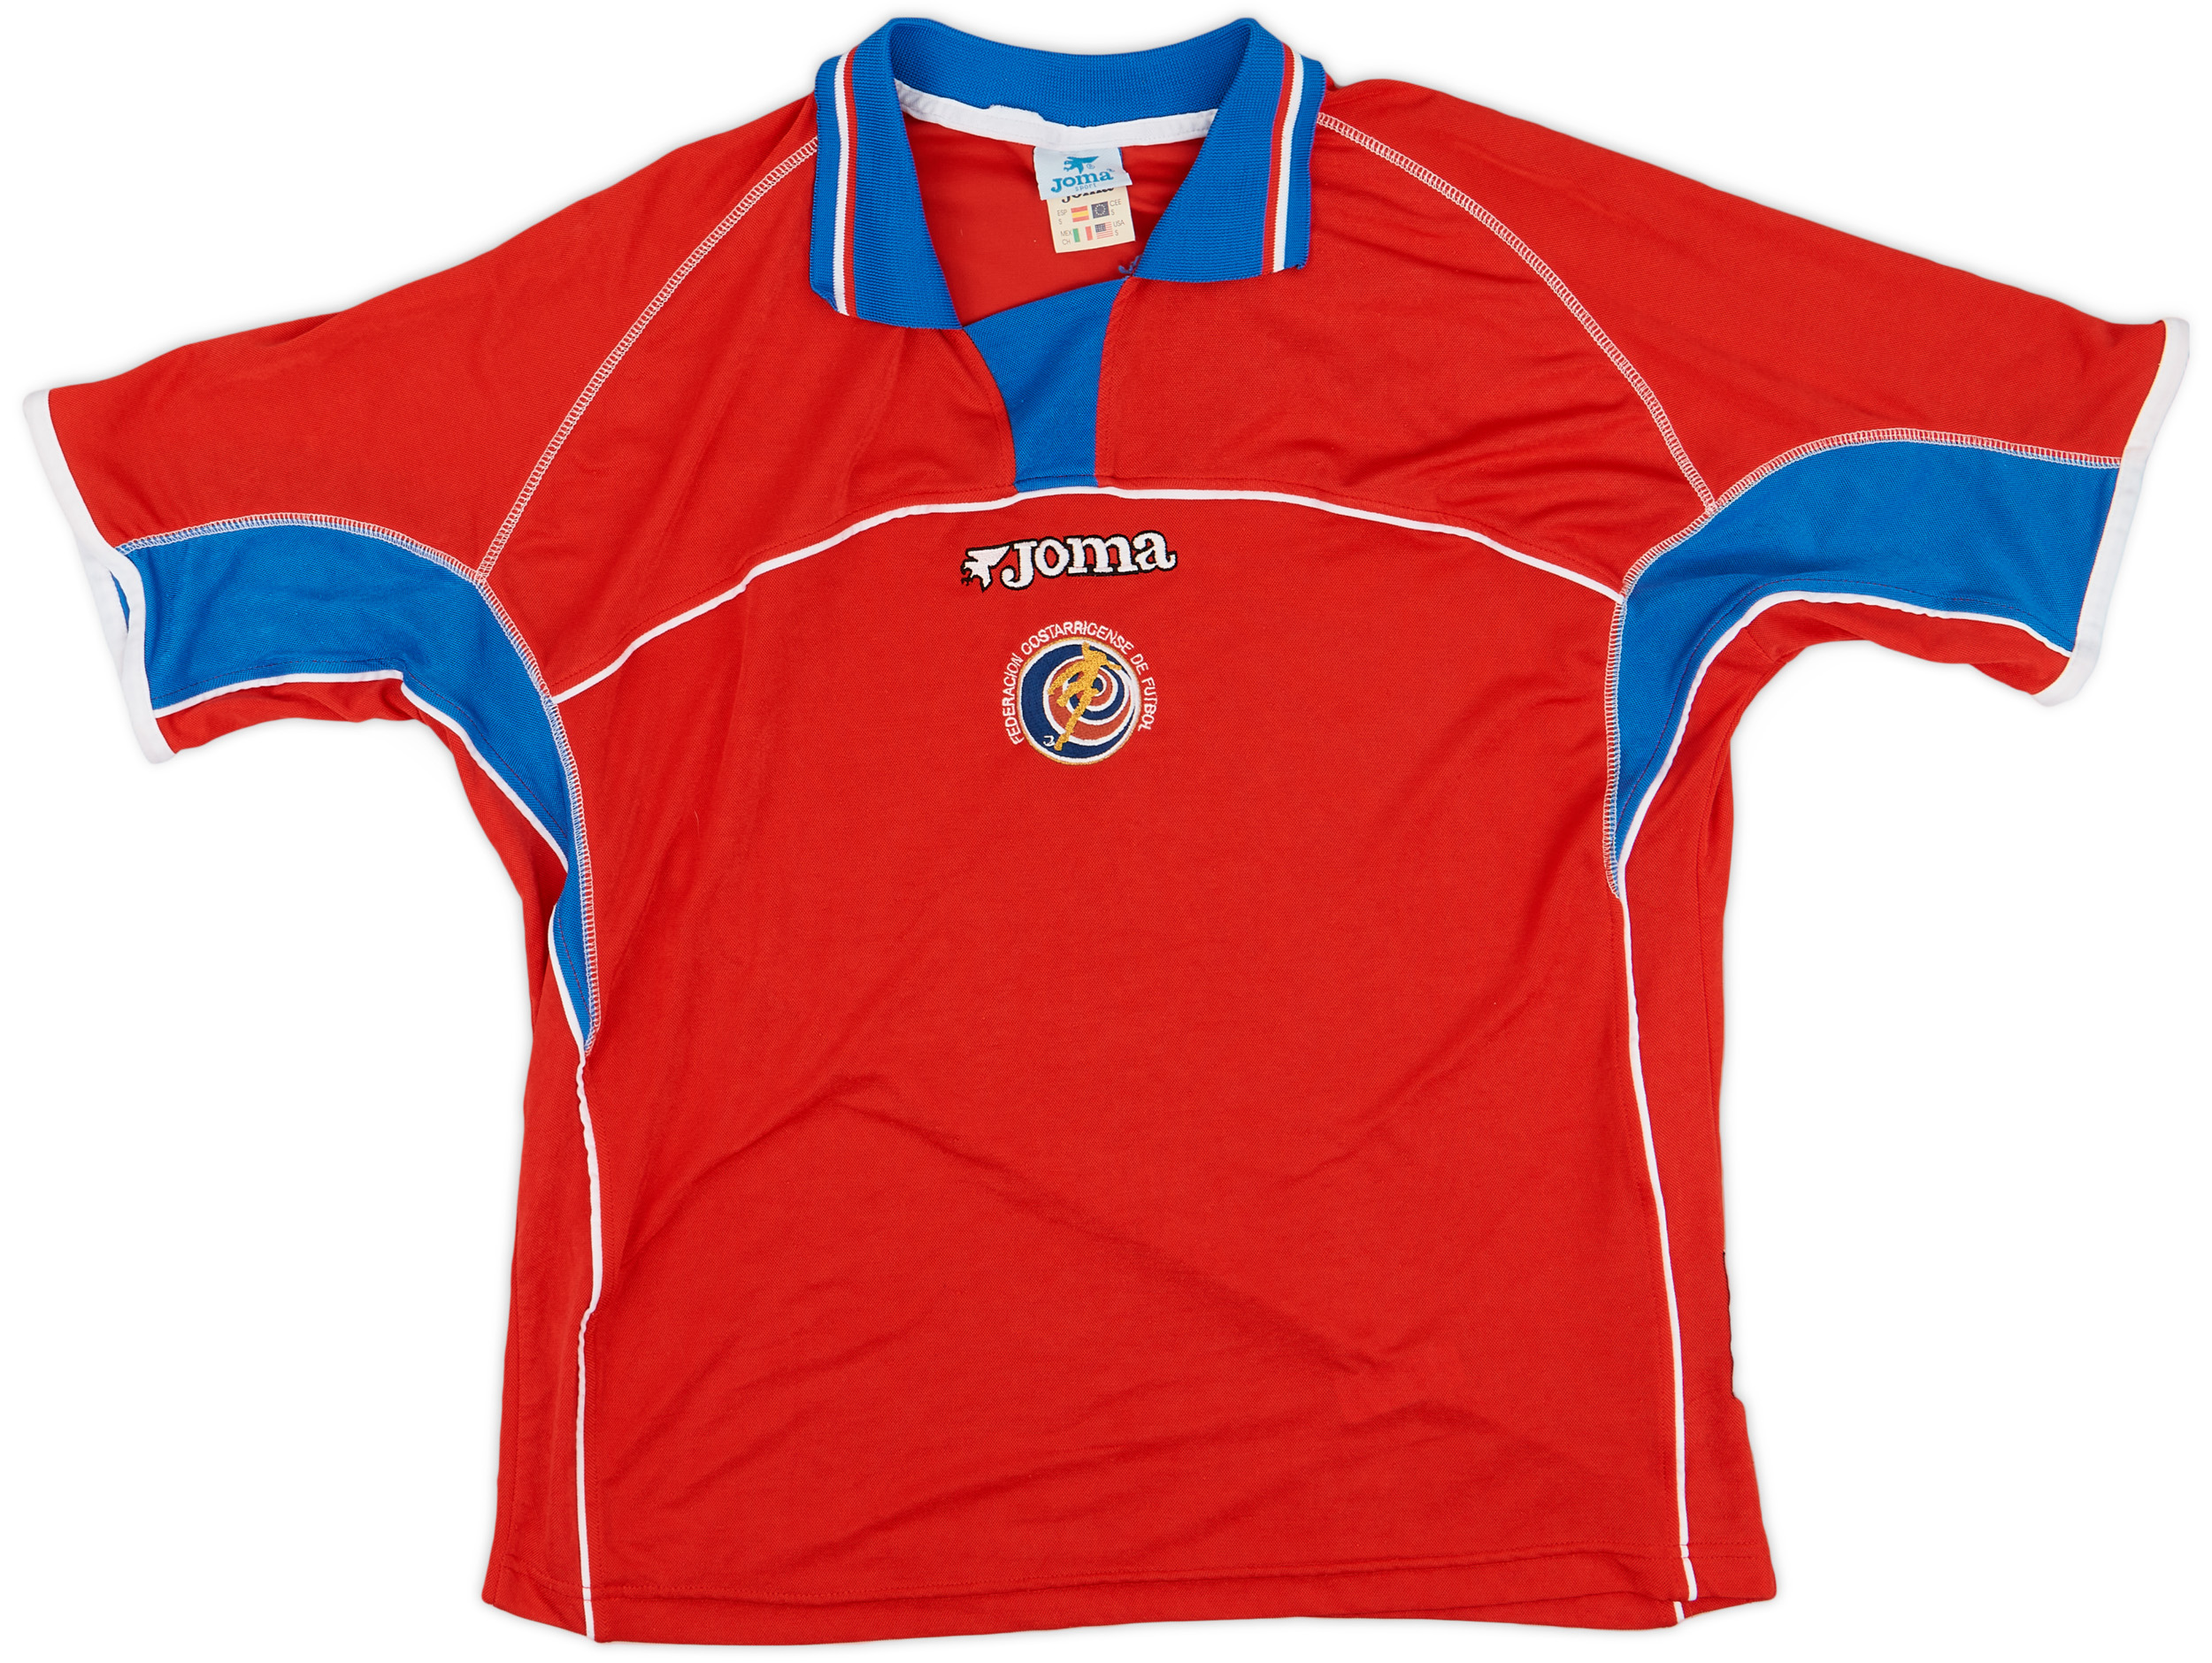 2002 Costa Rica Home Shirt - 8/10 - ()